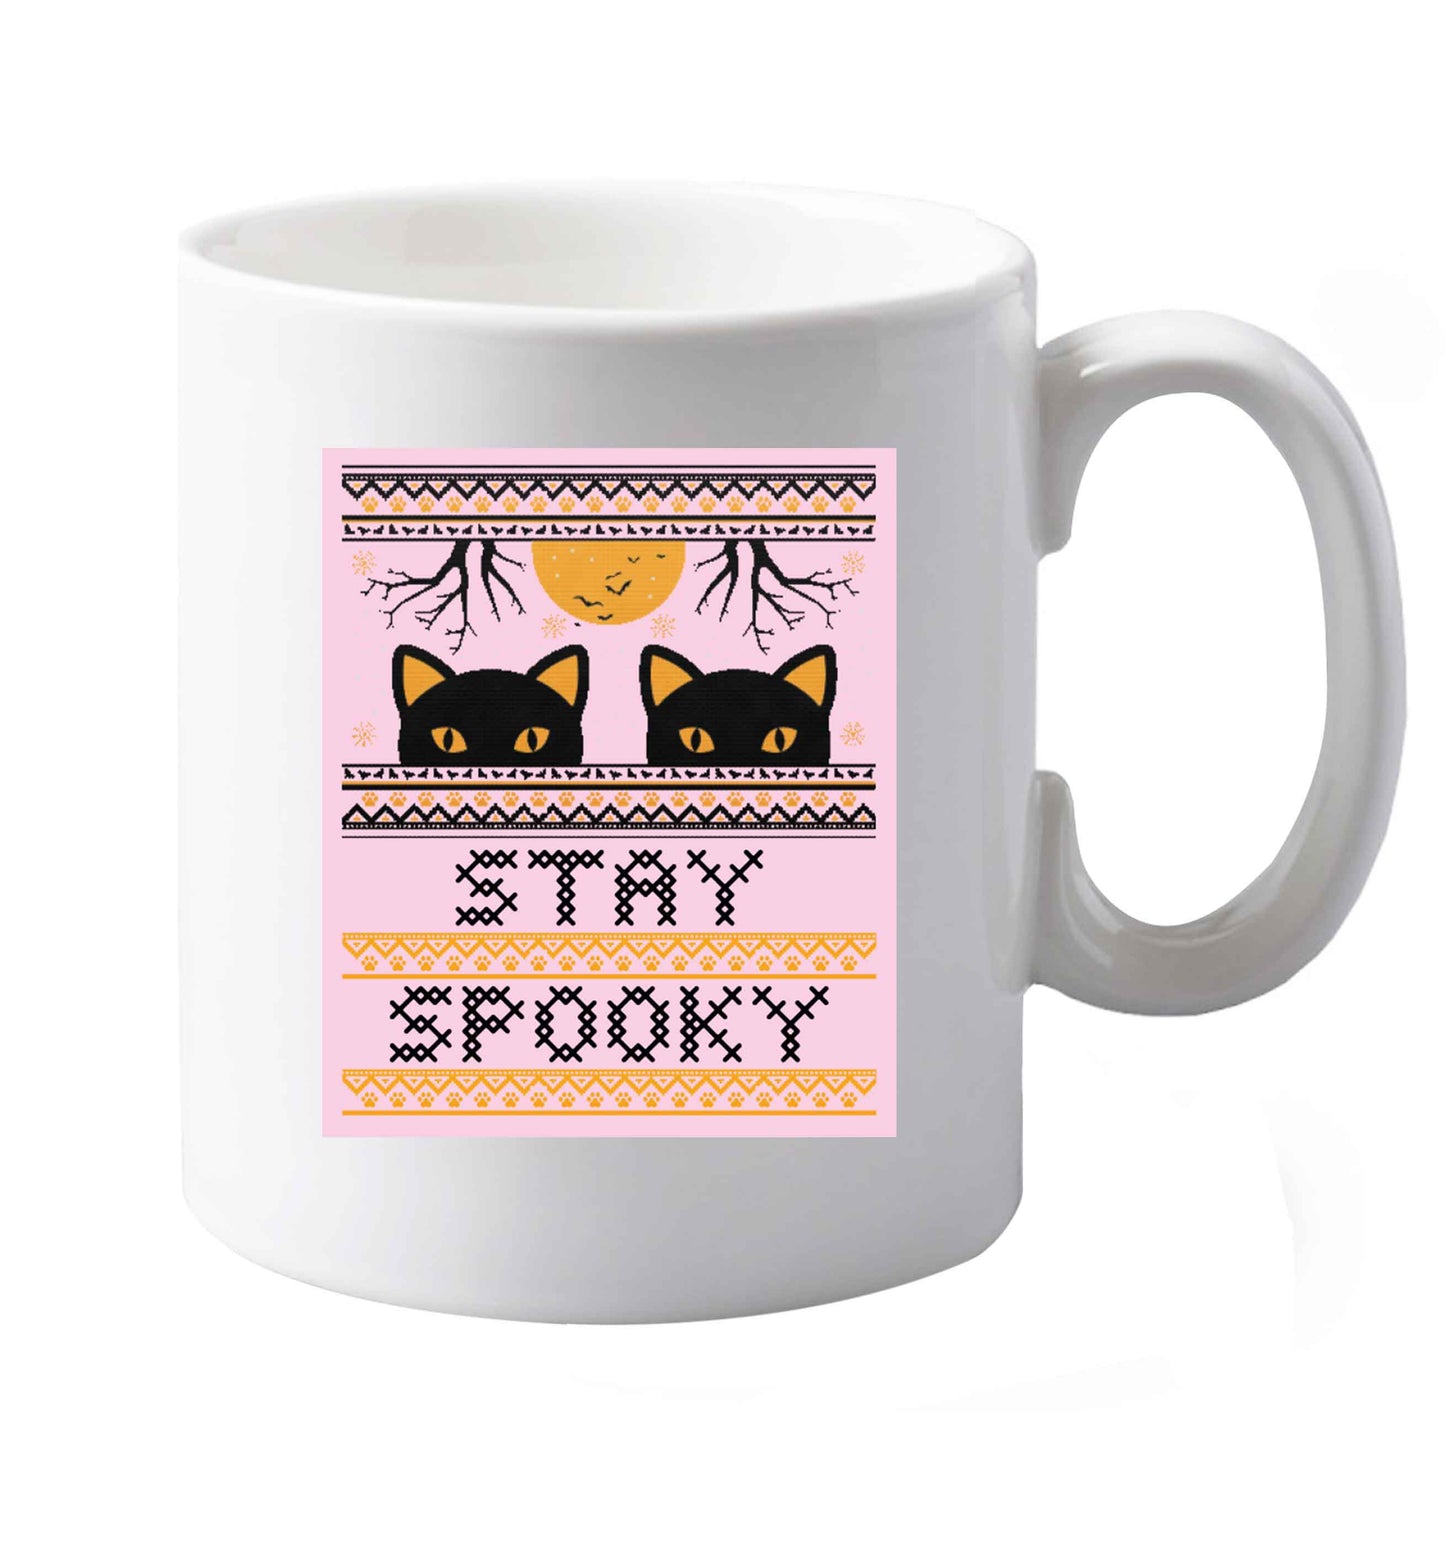 10 oz Stay spooky ceramic mug both sides